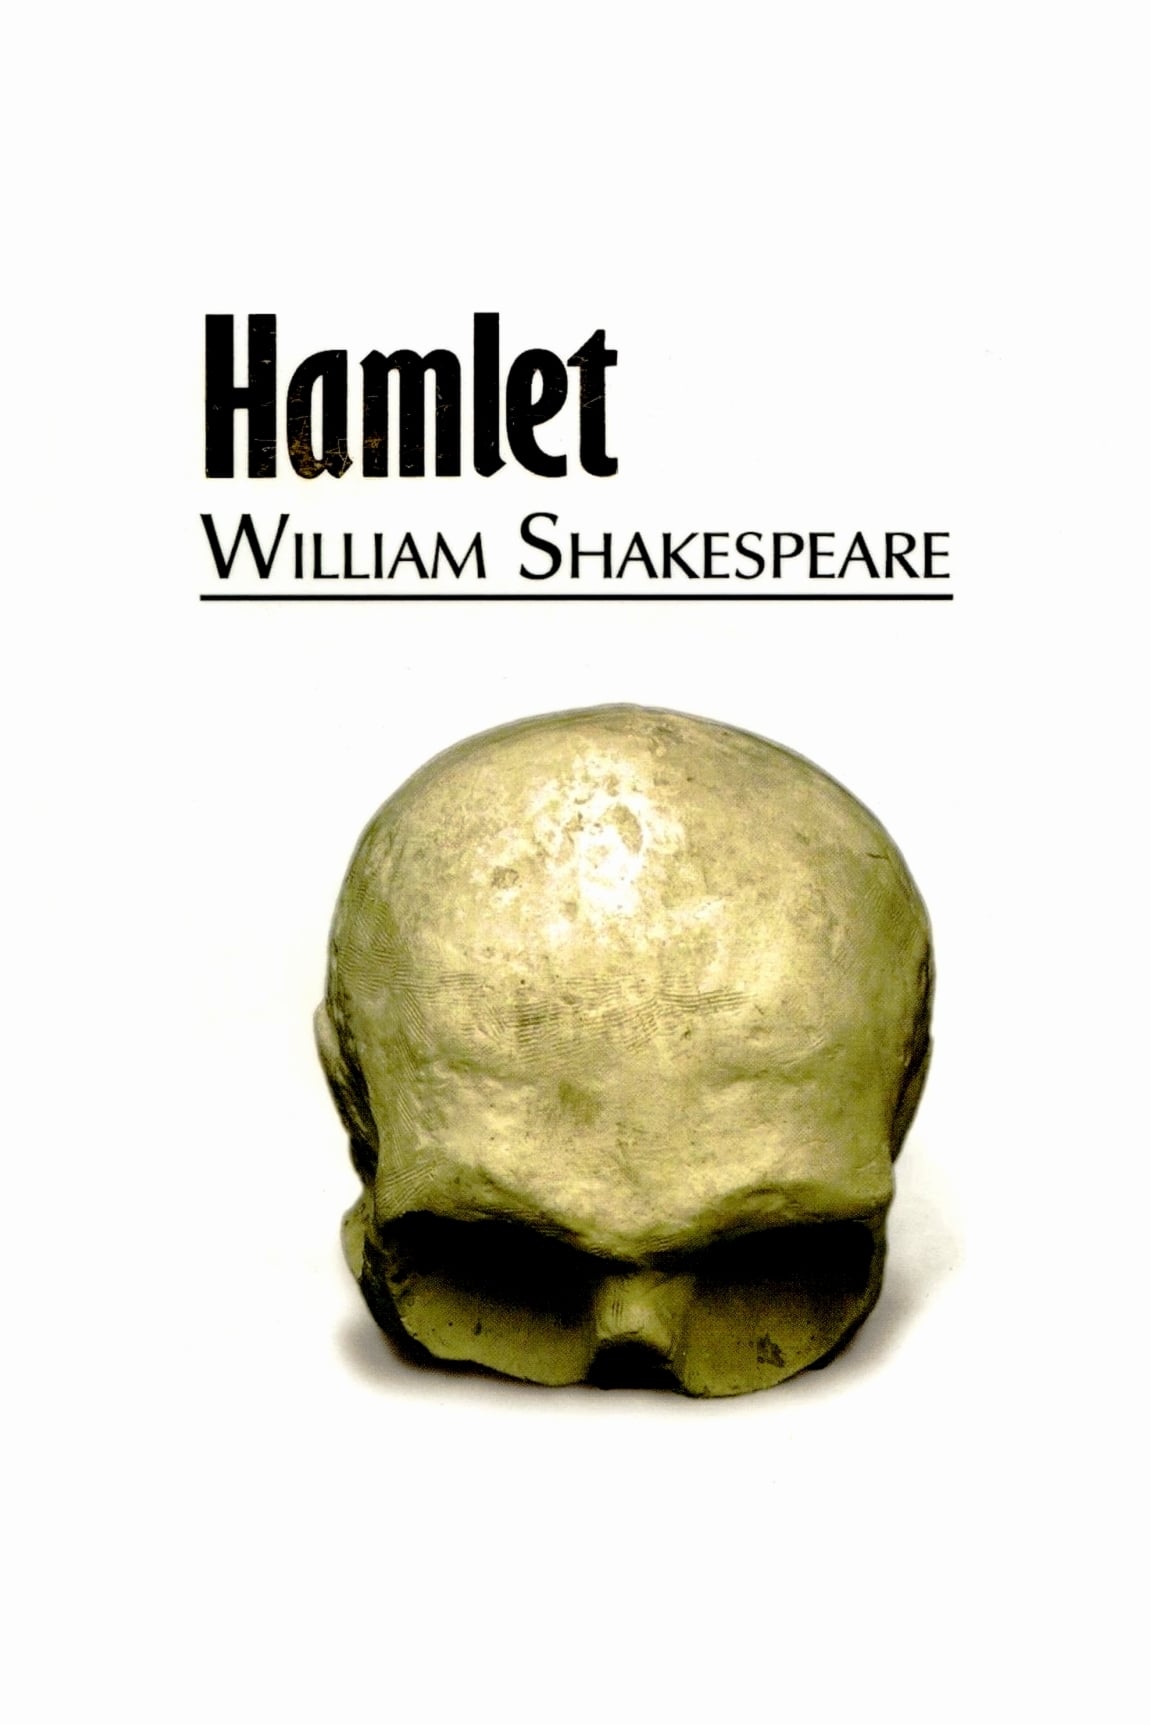 Hamlet (1970)